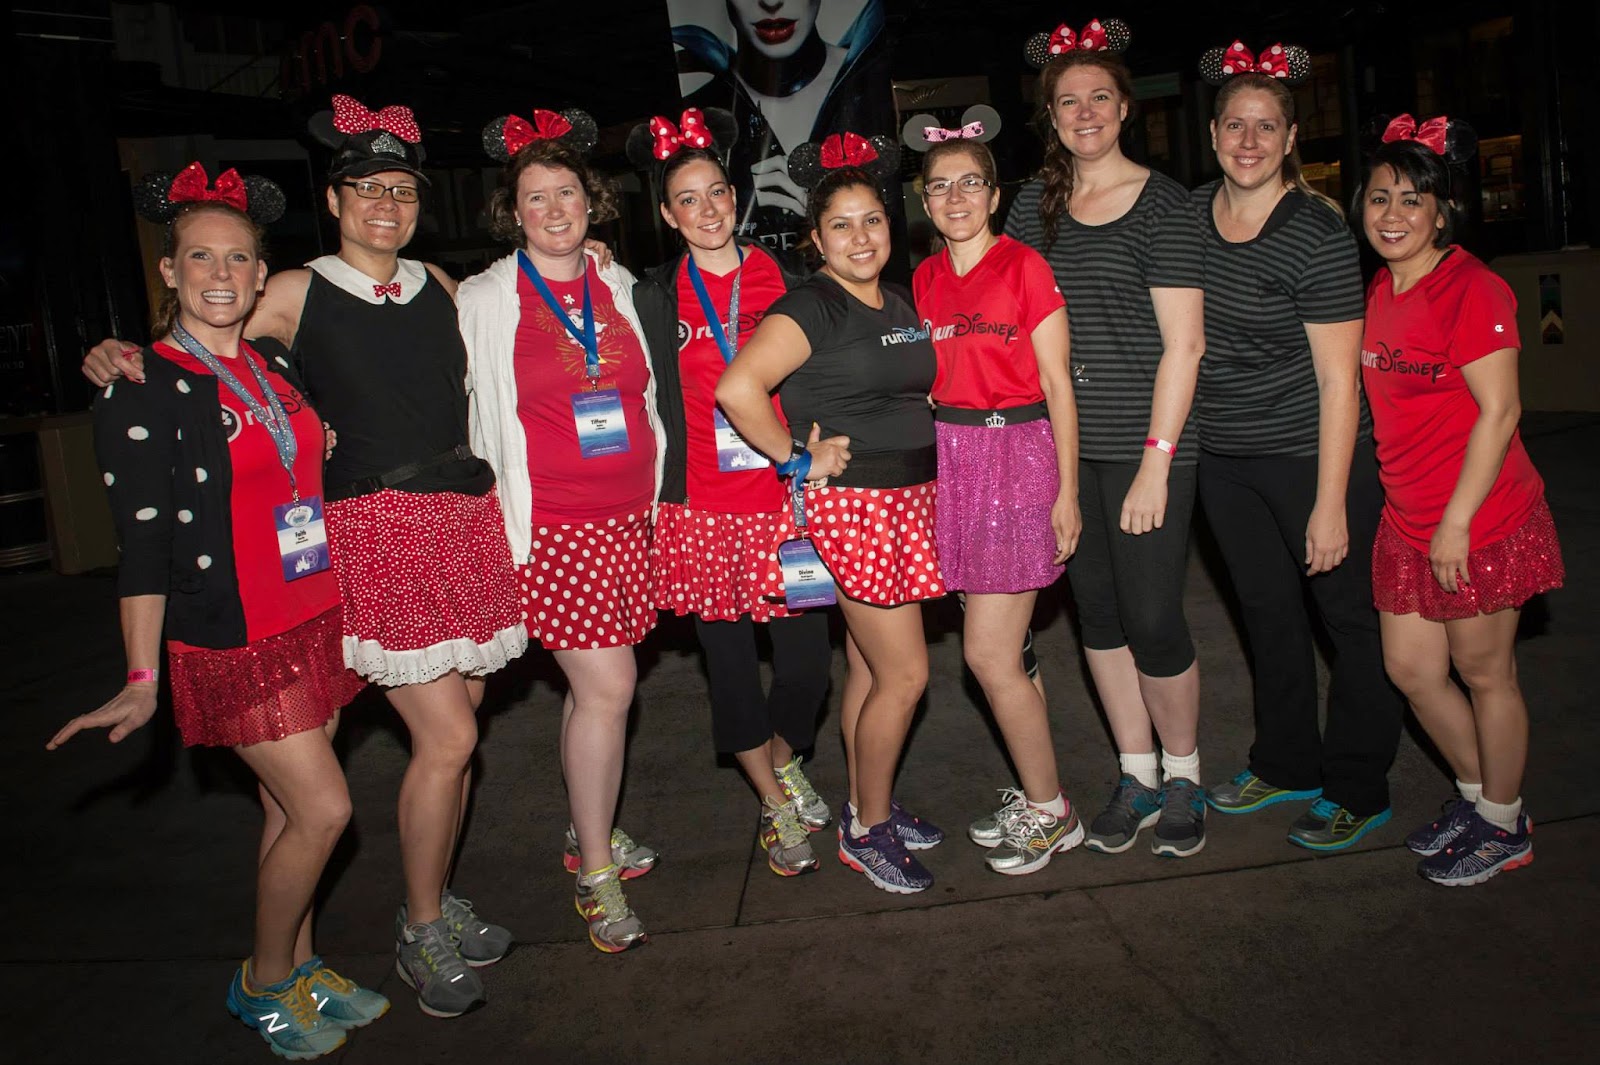 runDisney fun run at Disney Social Media Moms 2014